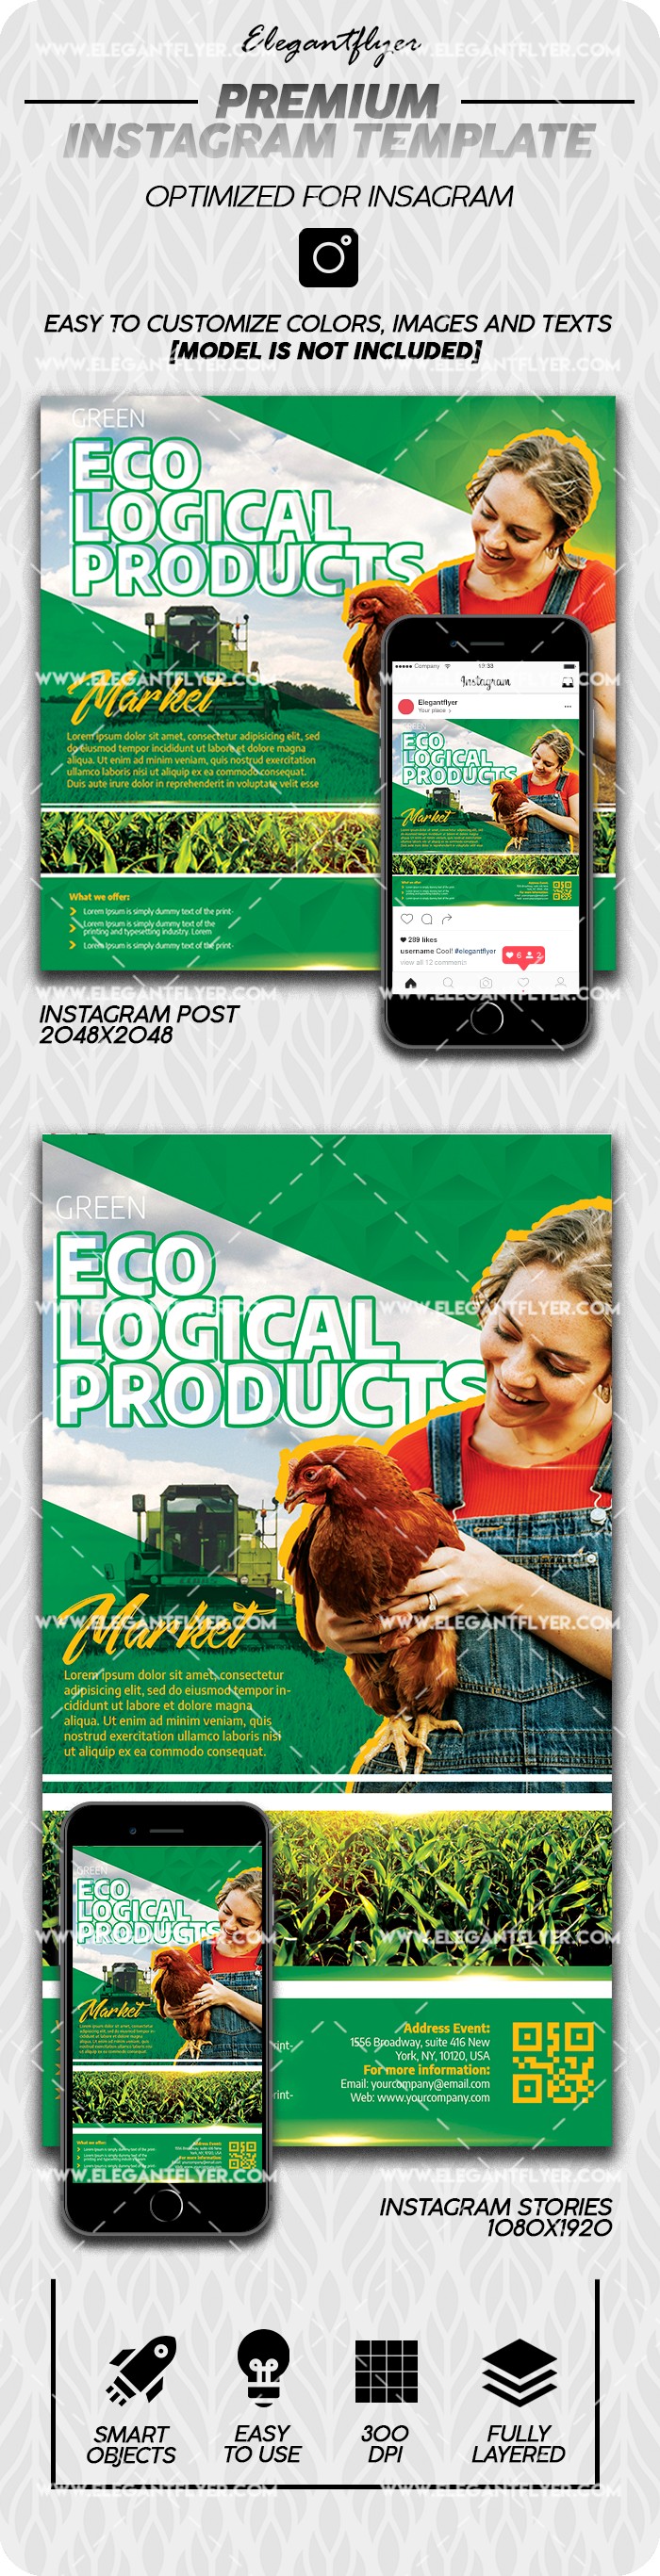 Ecological Products Instagram by ElegantFlyer